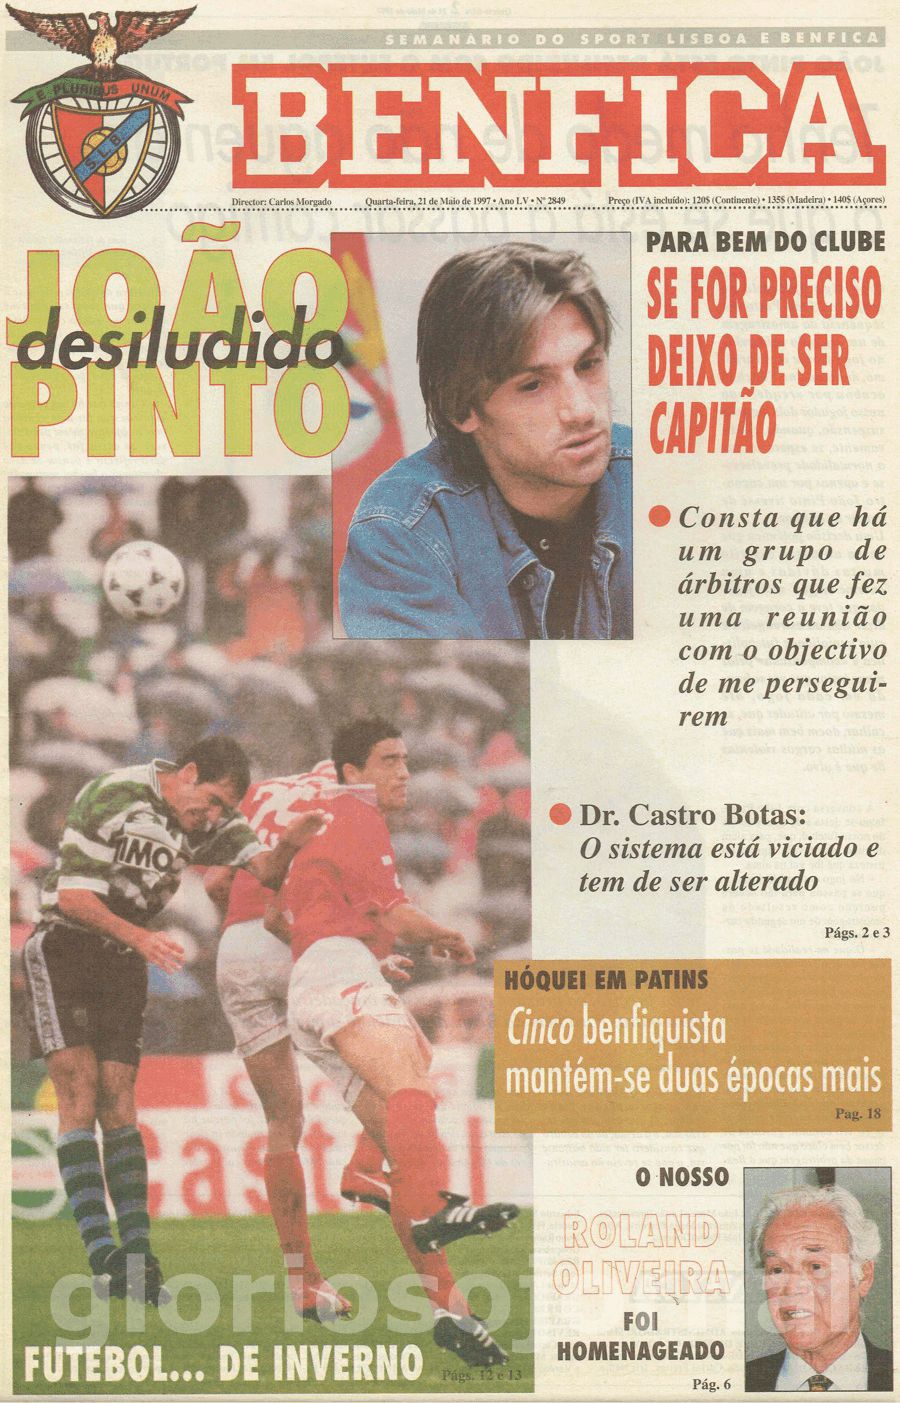 jornal o benfica 2849 1997-05-21